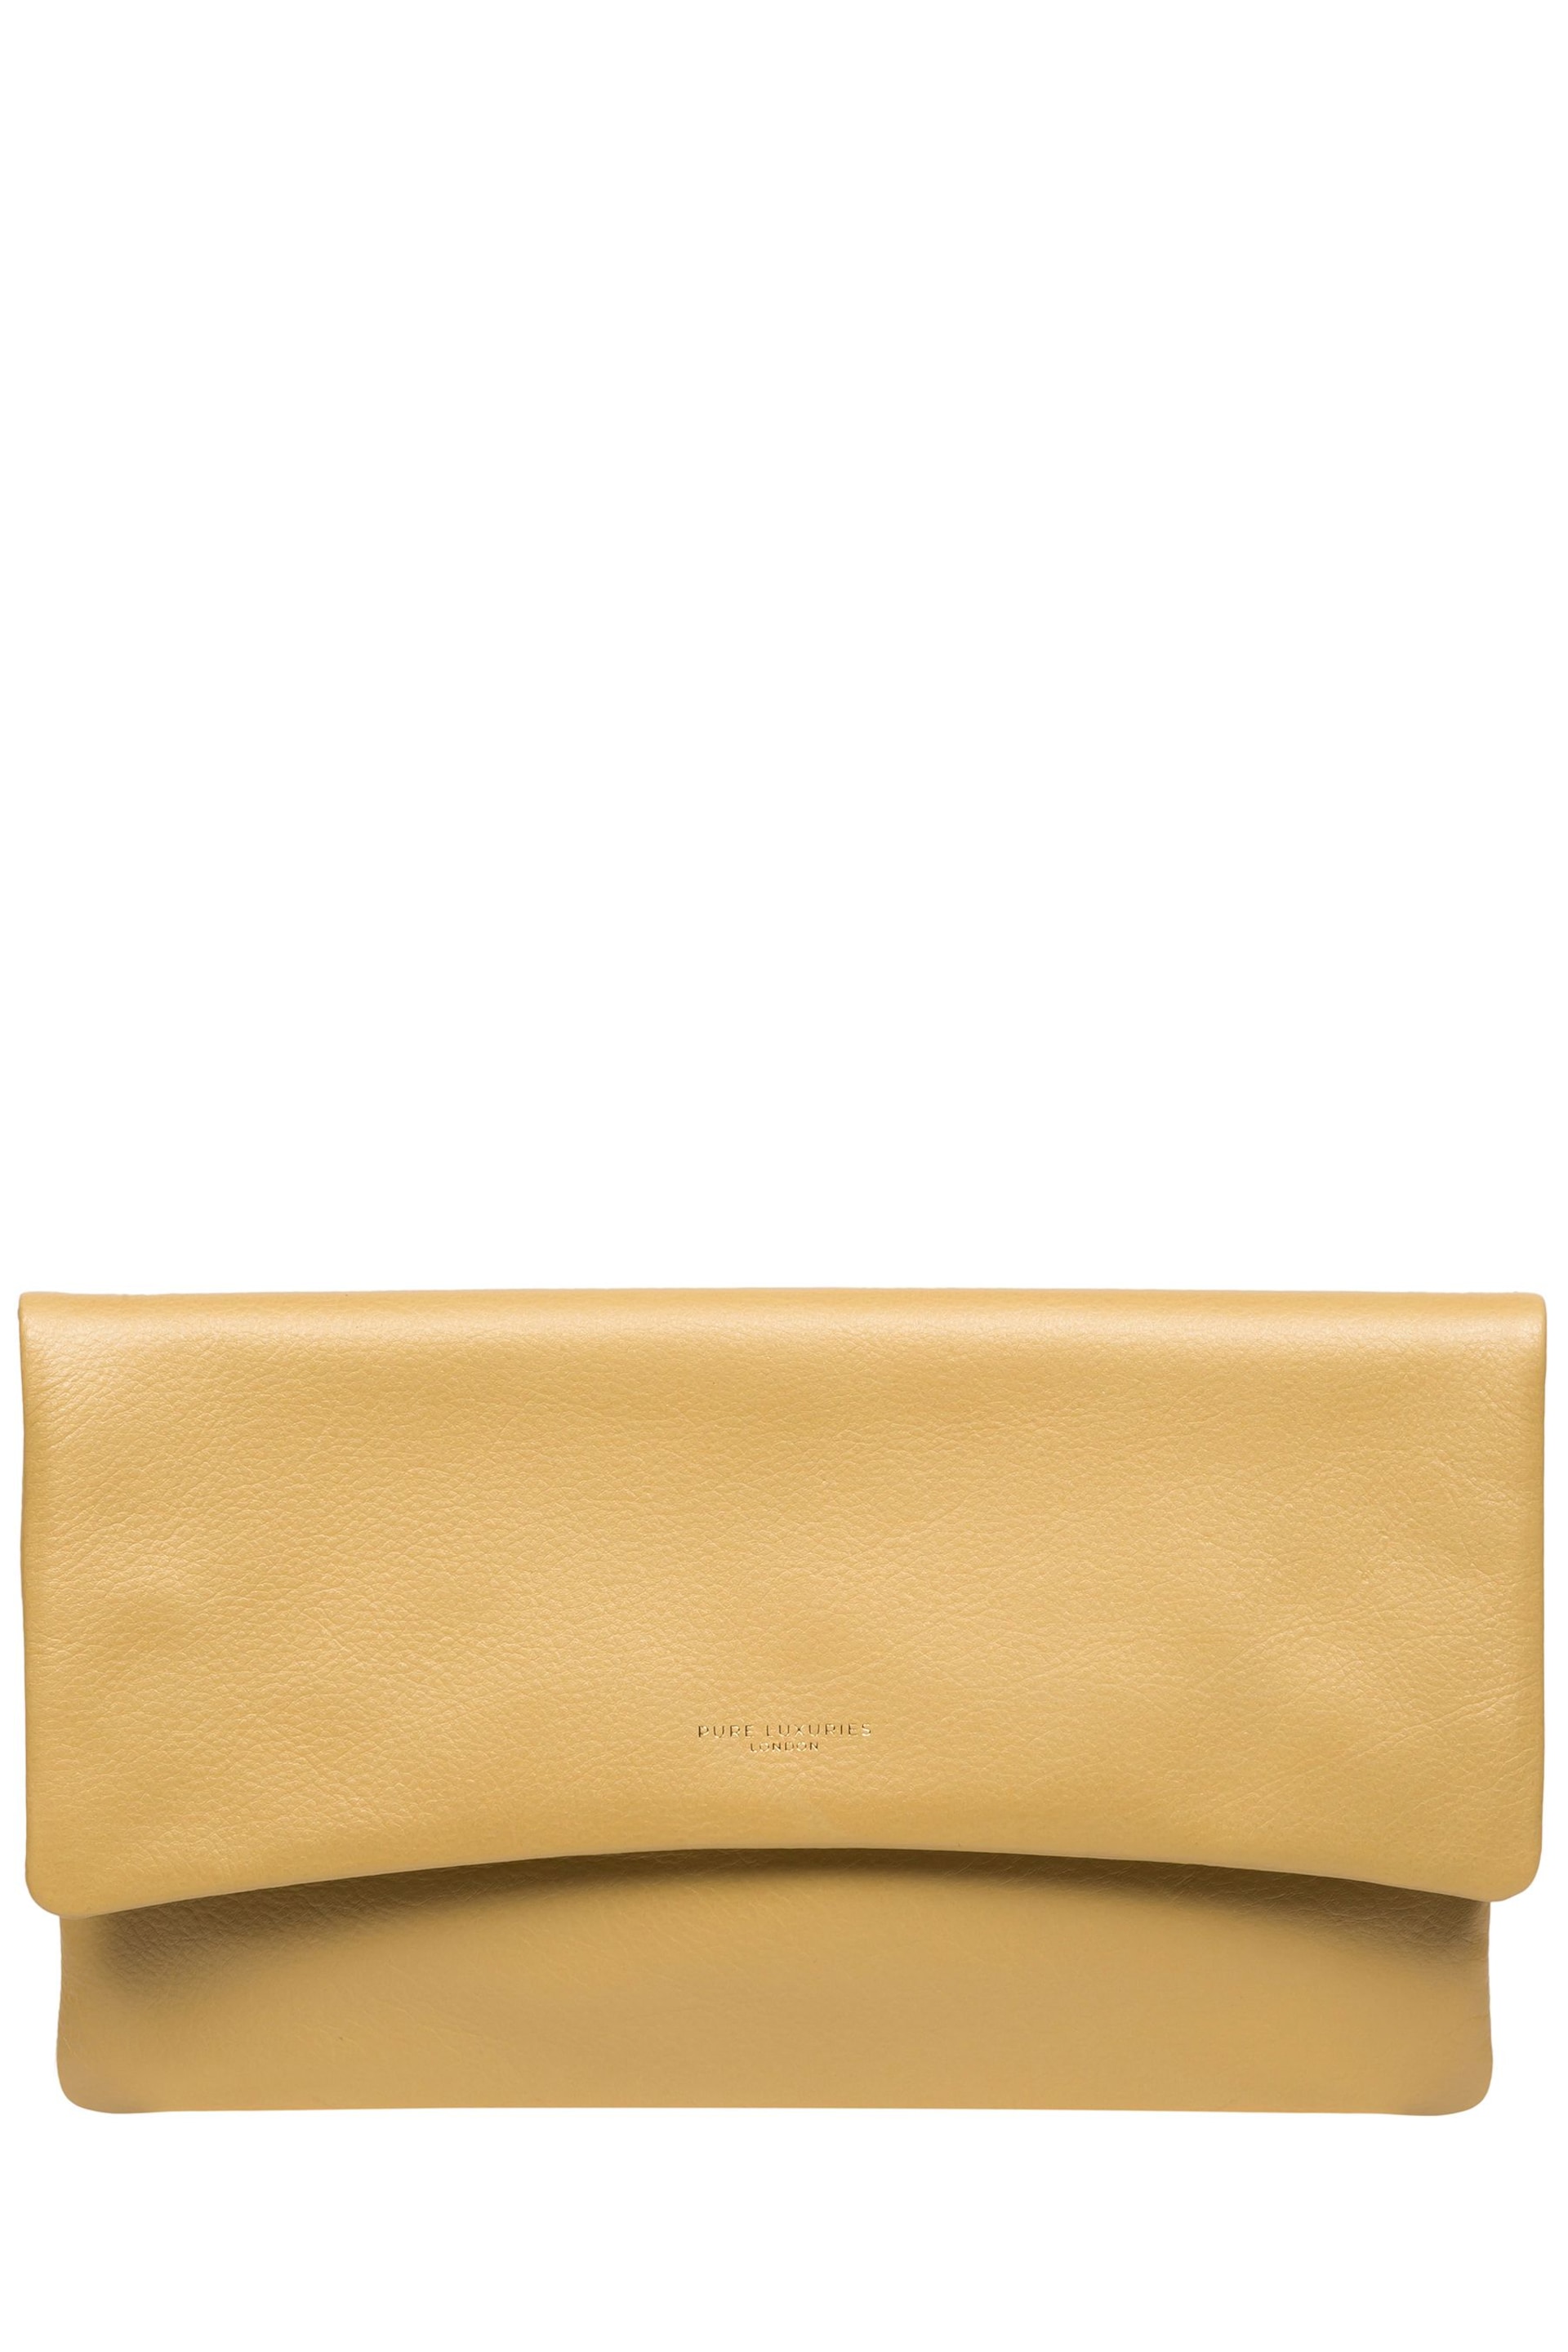 Pure Luxuries London Amelia Nappa Leather Clutch Bag - Image 1 of 6